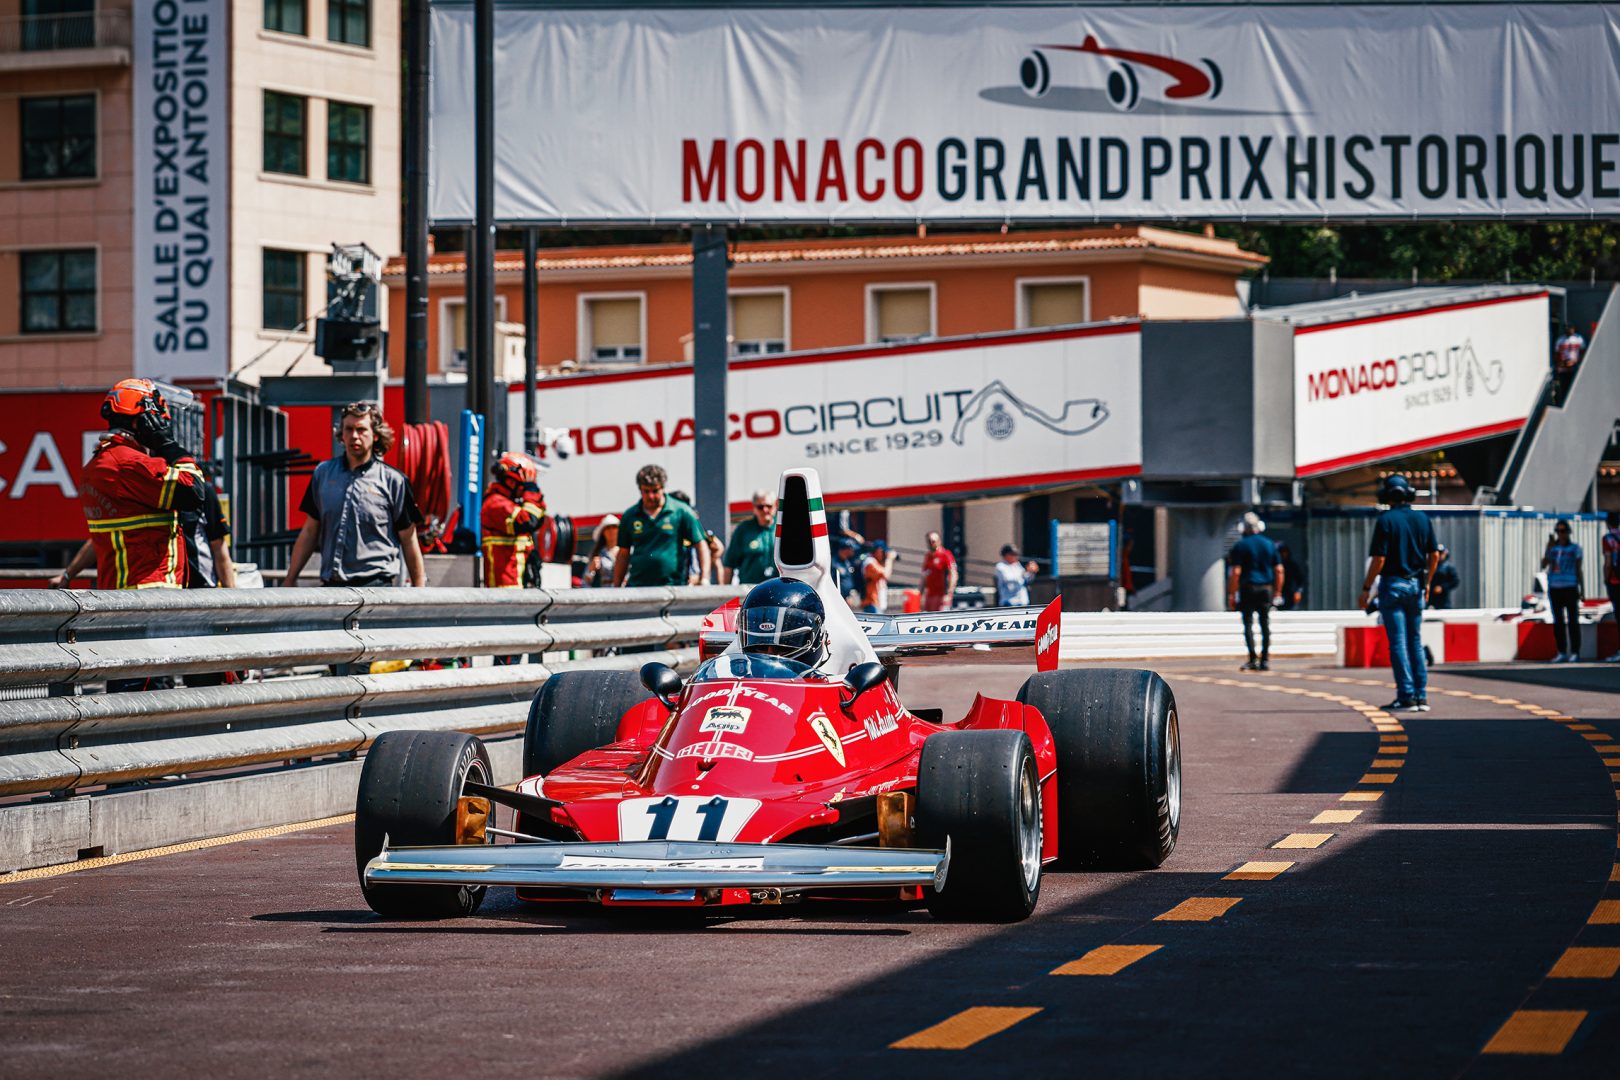 14th Grand Prix de Monaco Historique - Automobile Club de Monaco